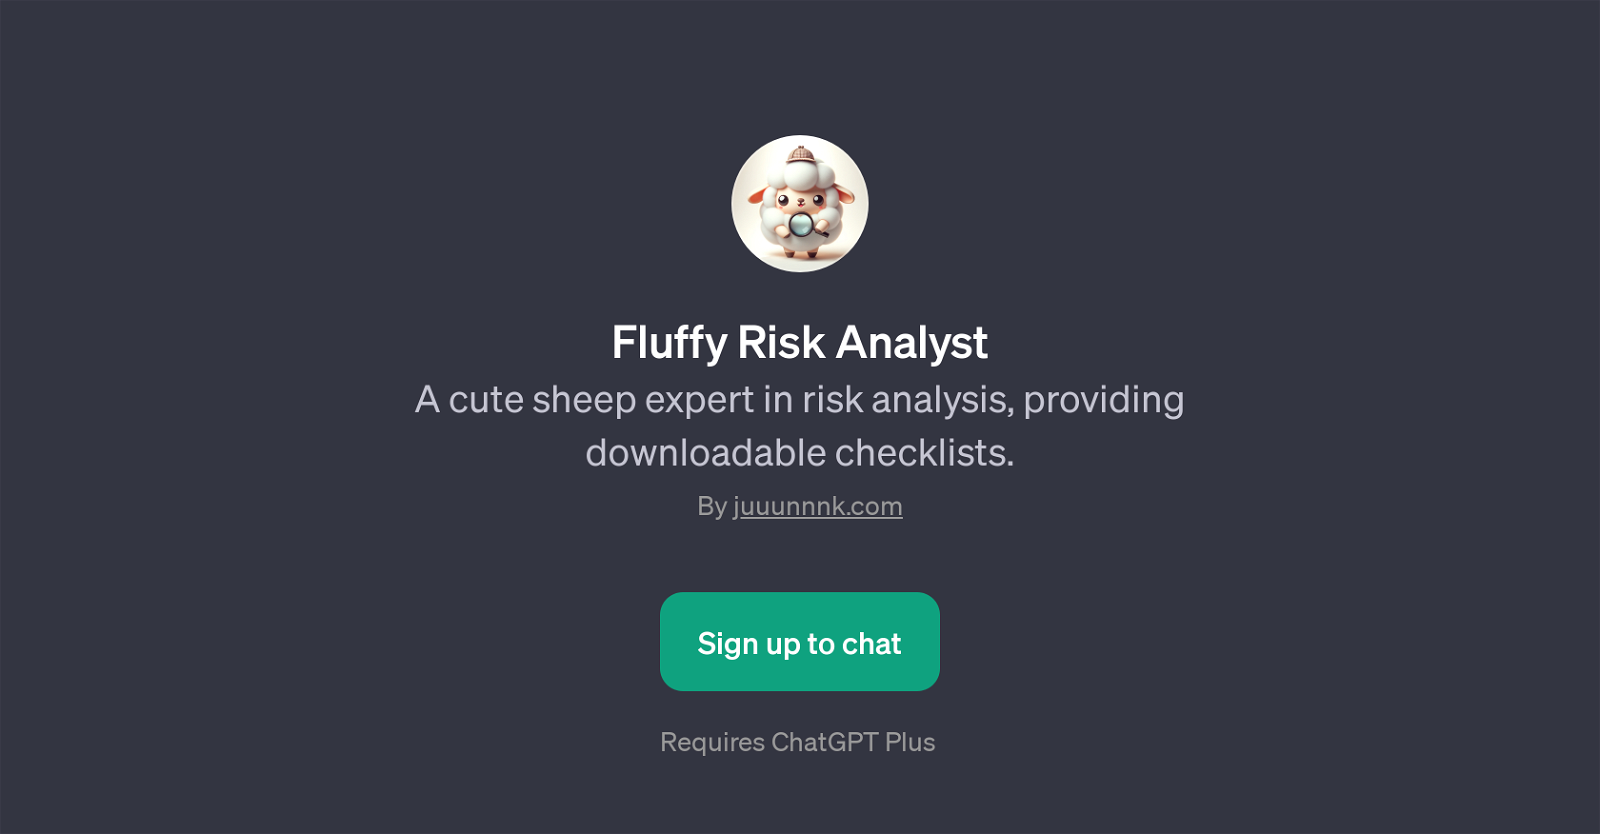 Fluffy Risk Analyst website